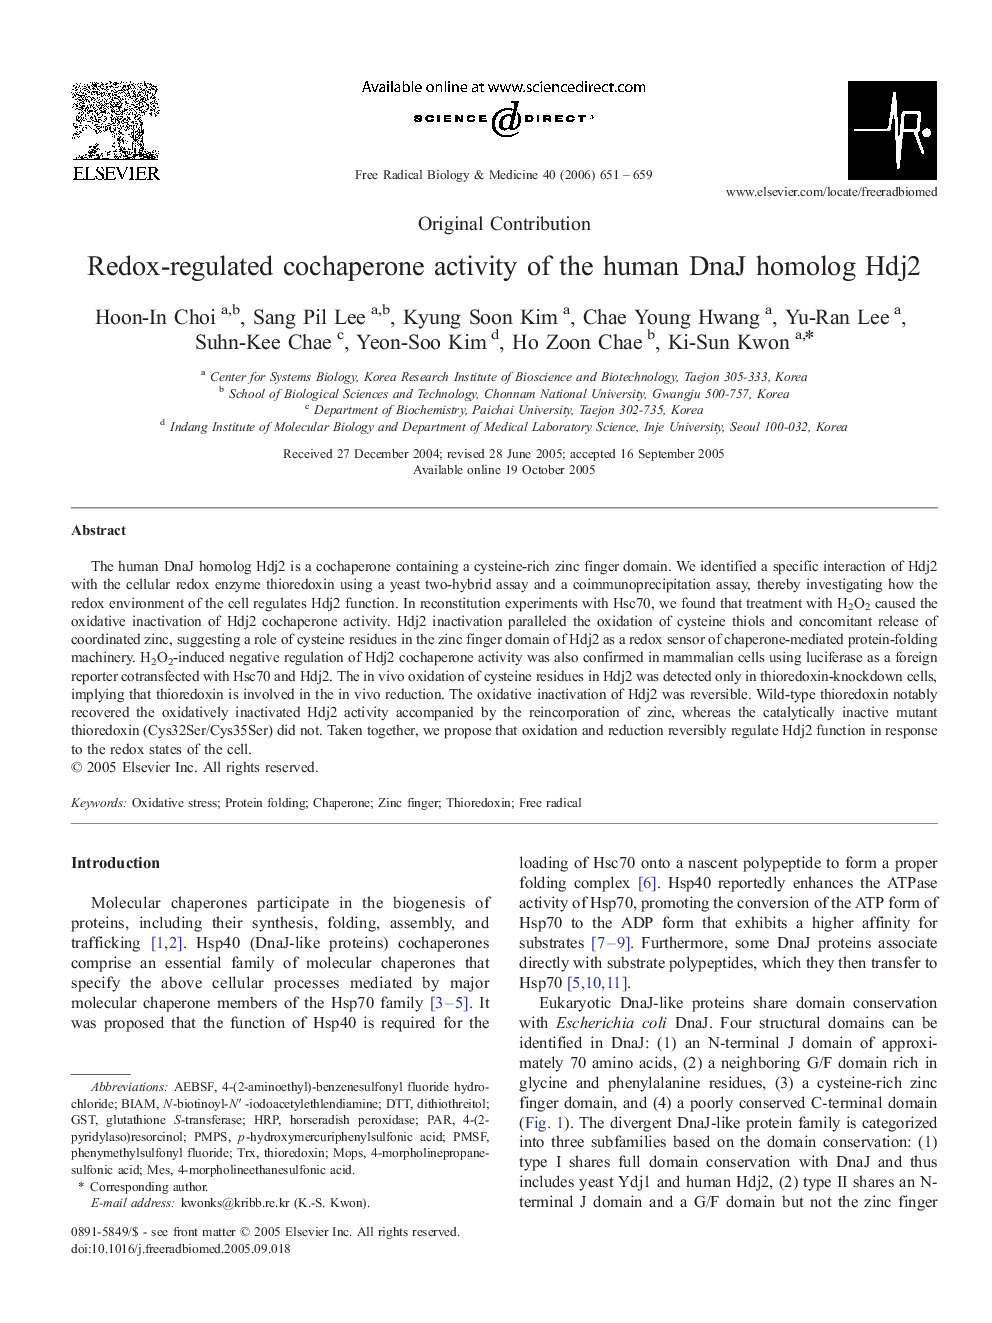 Redox-regulated cochaperone activity of the human DnaJ homolog Hdj2